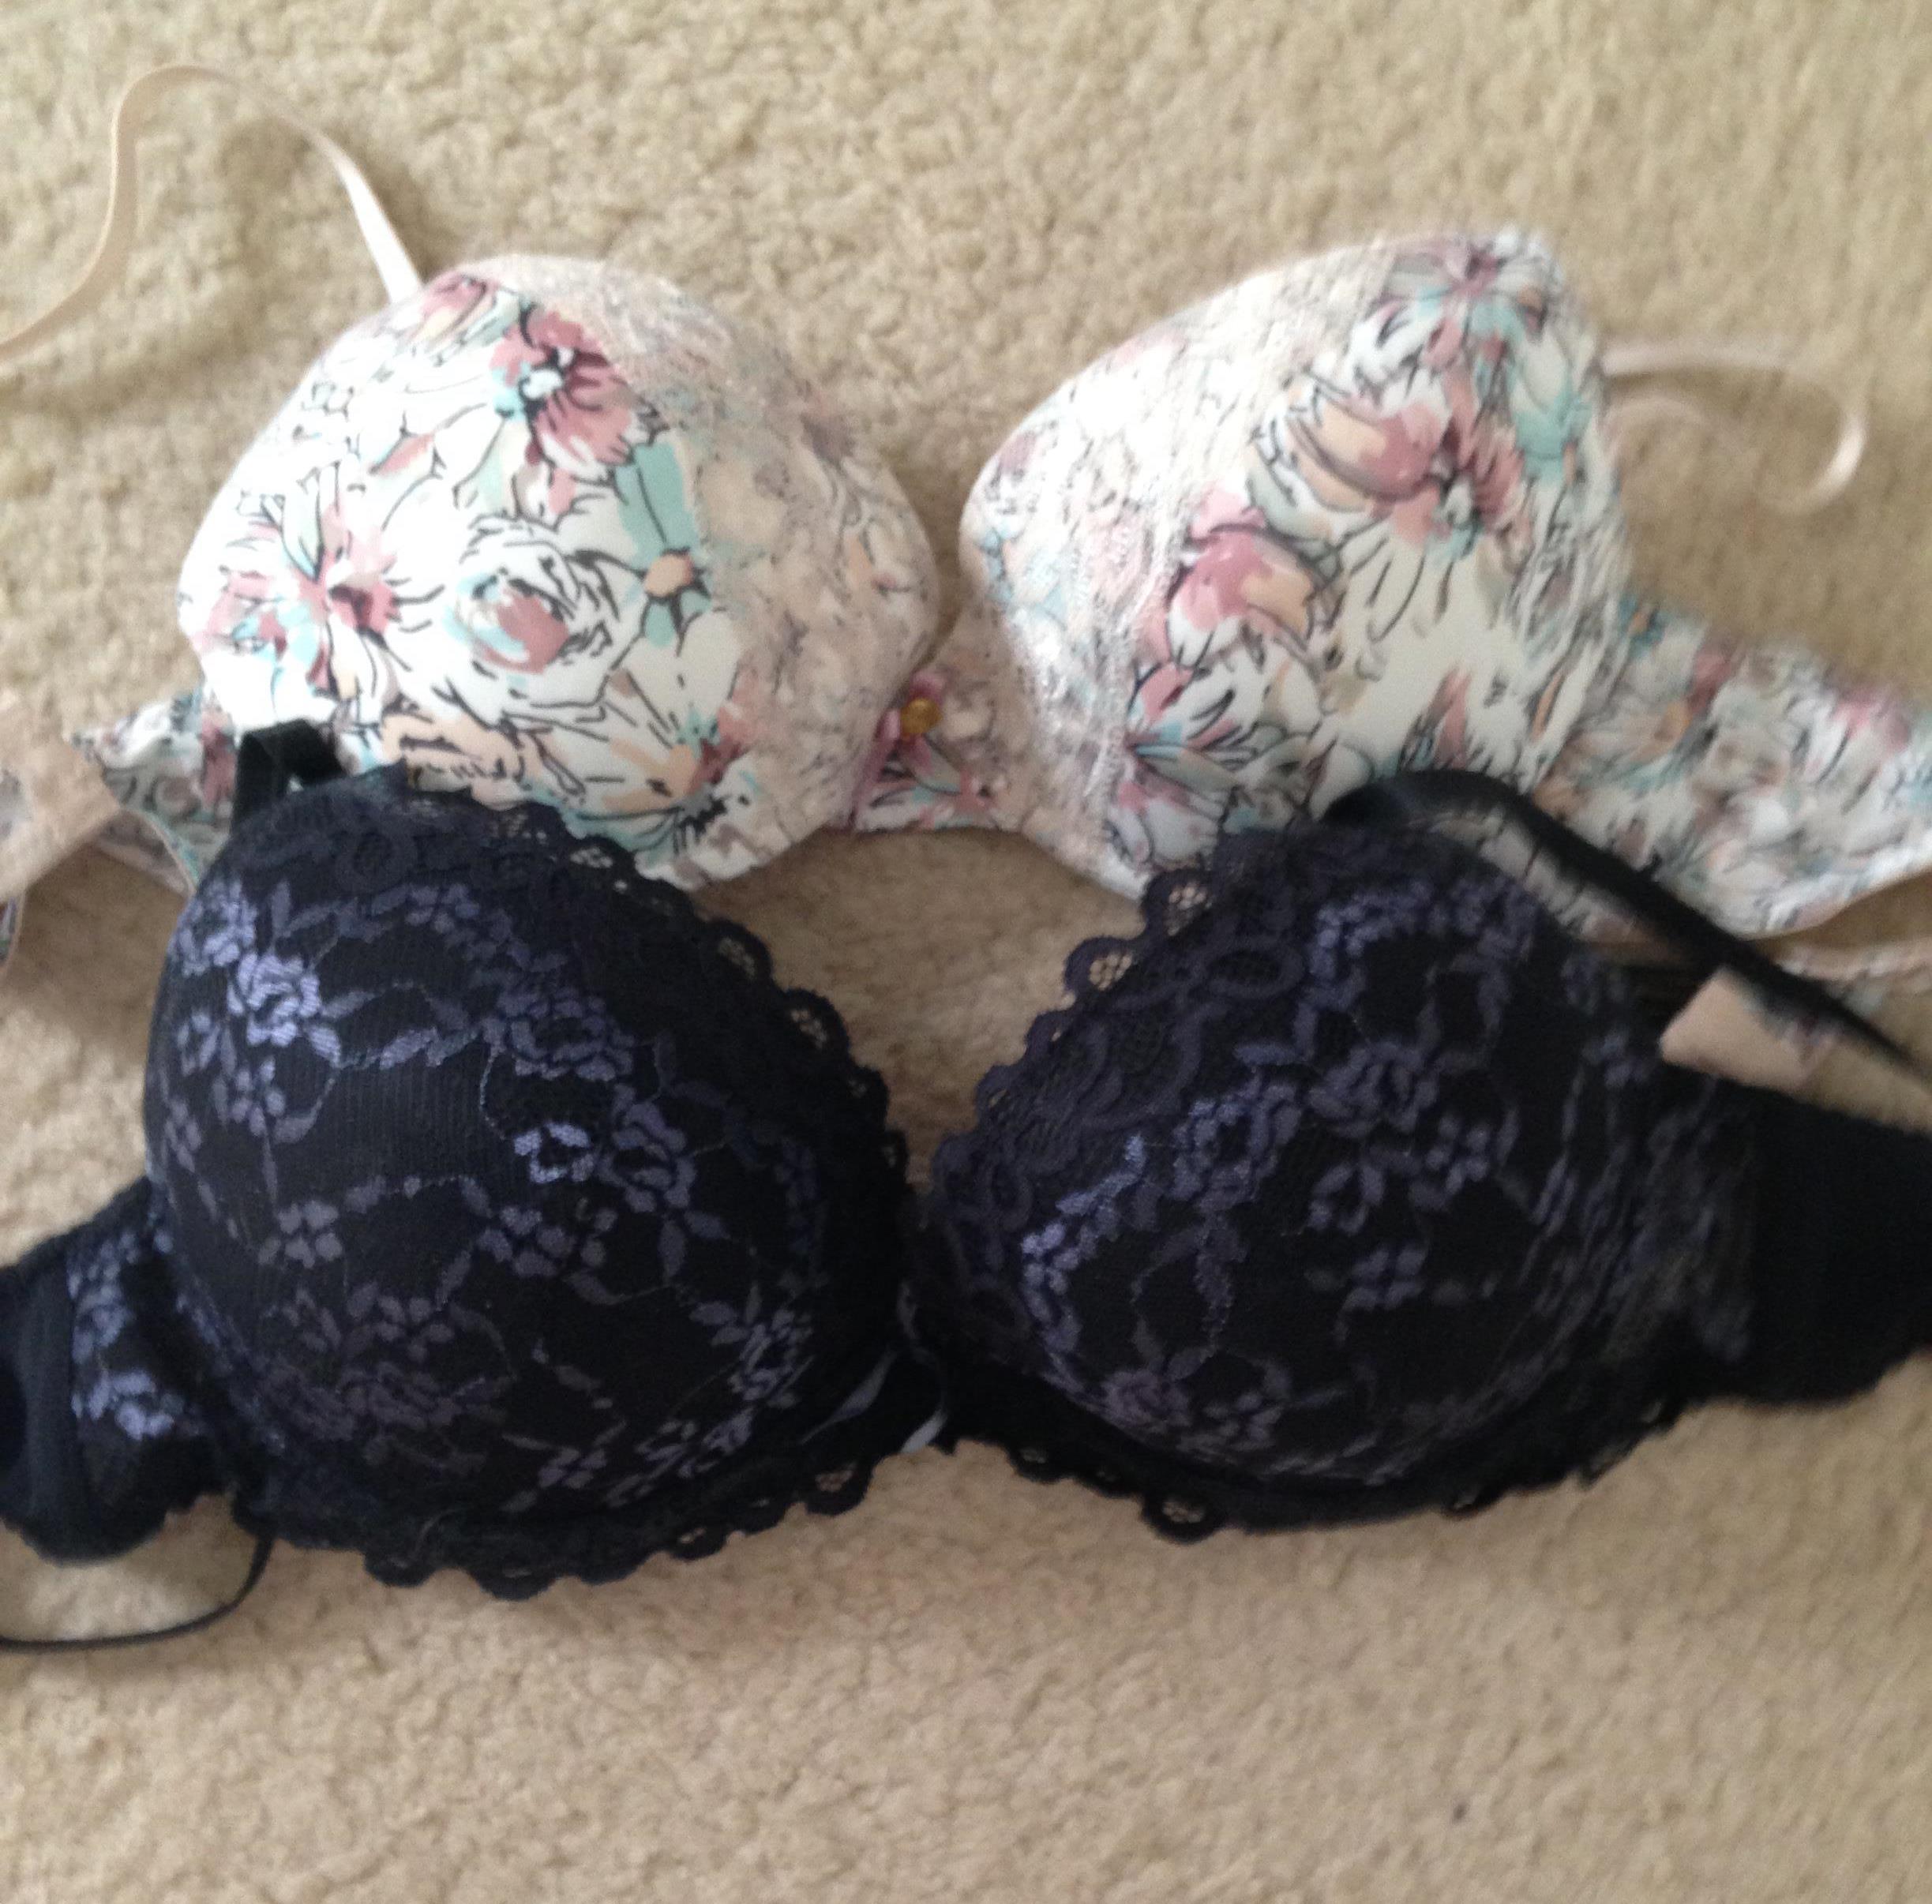 Marilyn Monroe Bras from TJ Maxx. At 5.99 each my new favorite bras